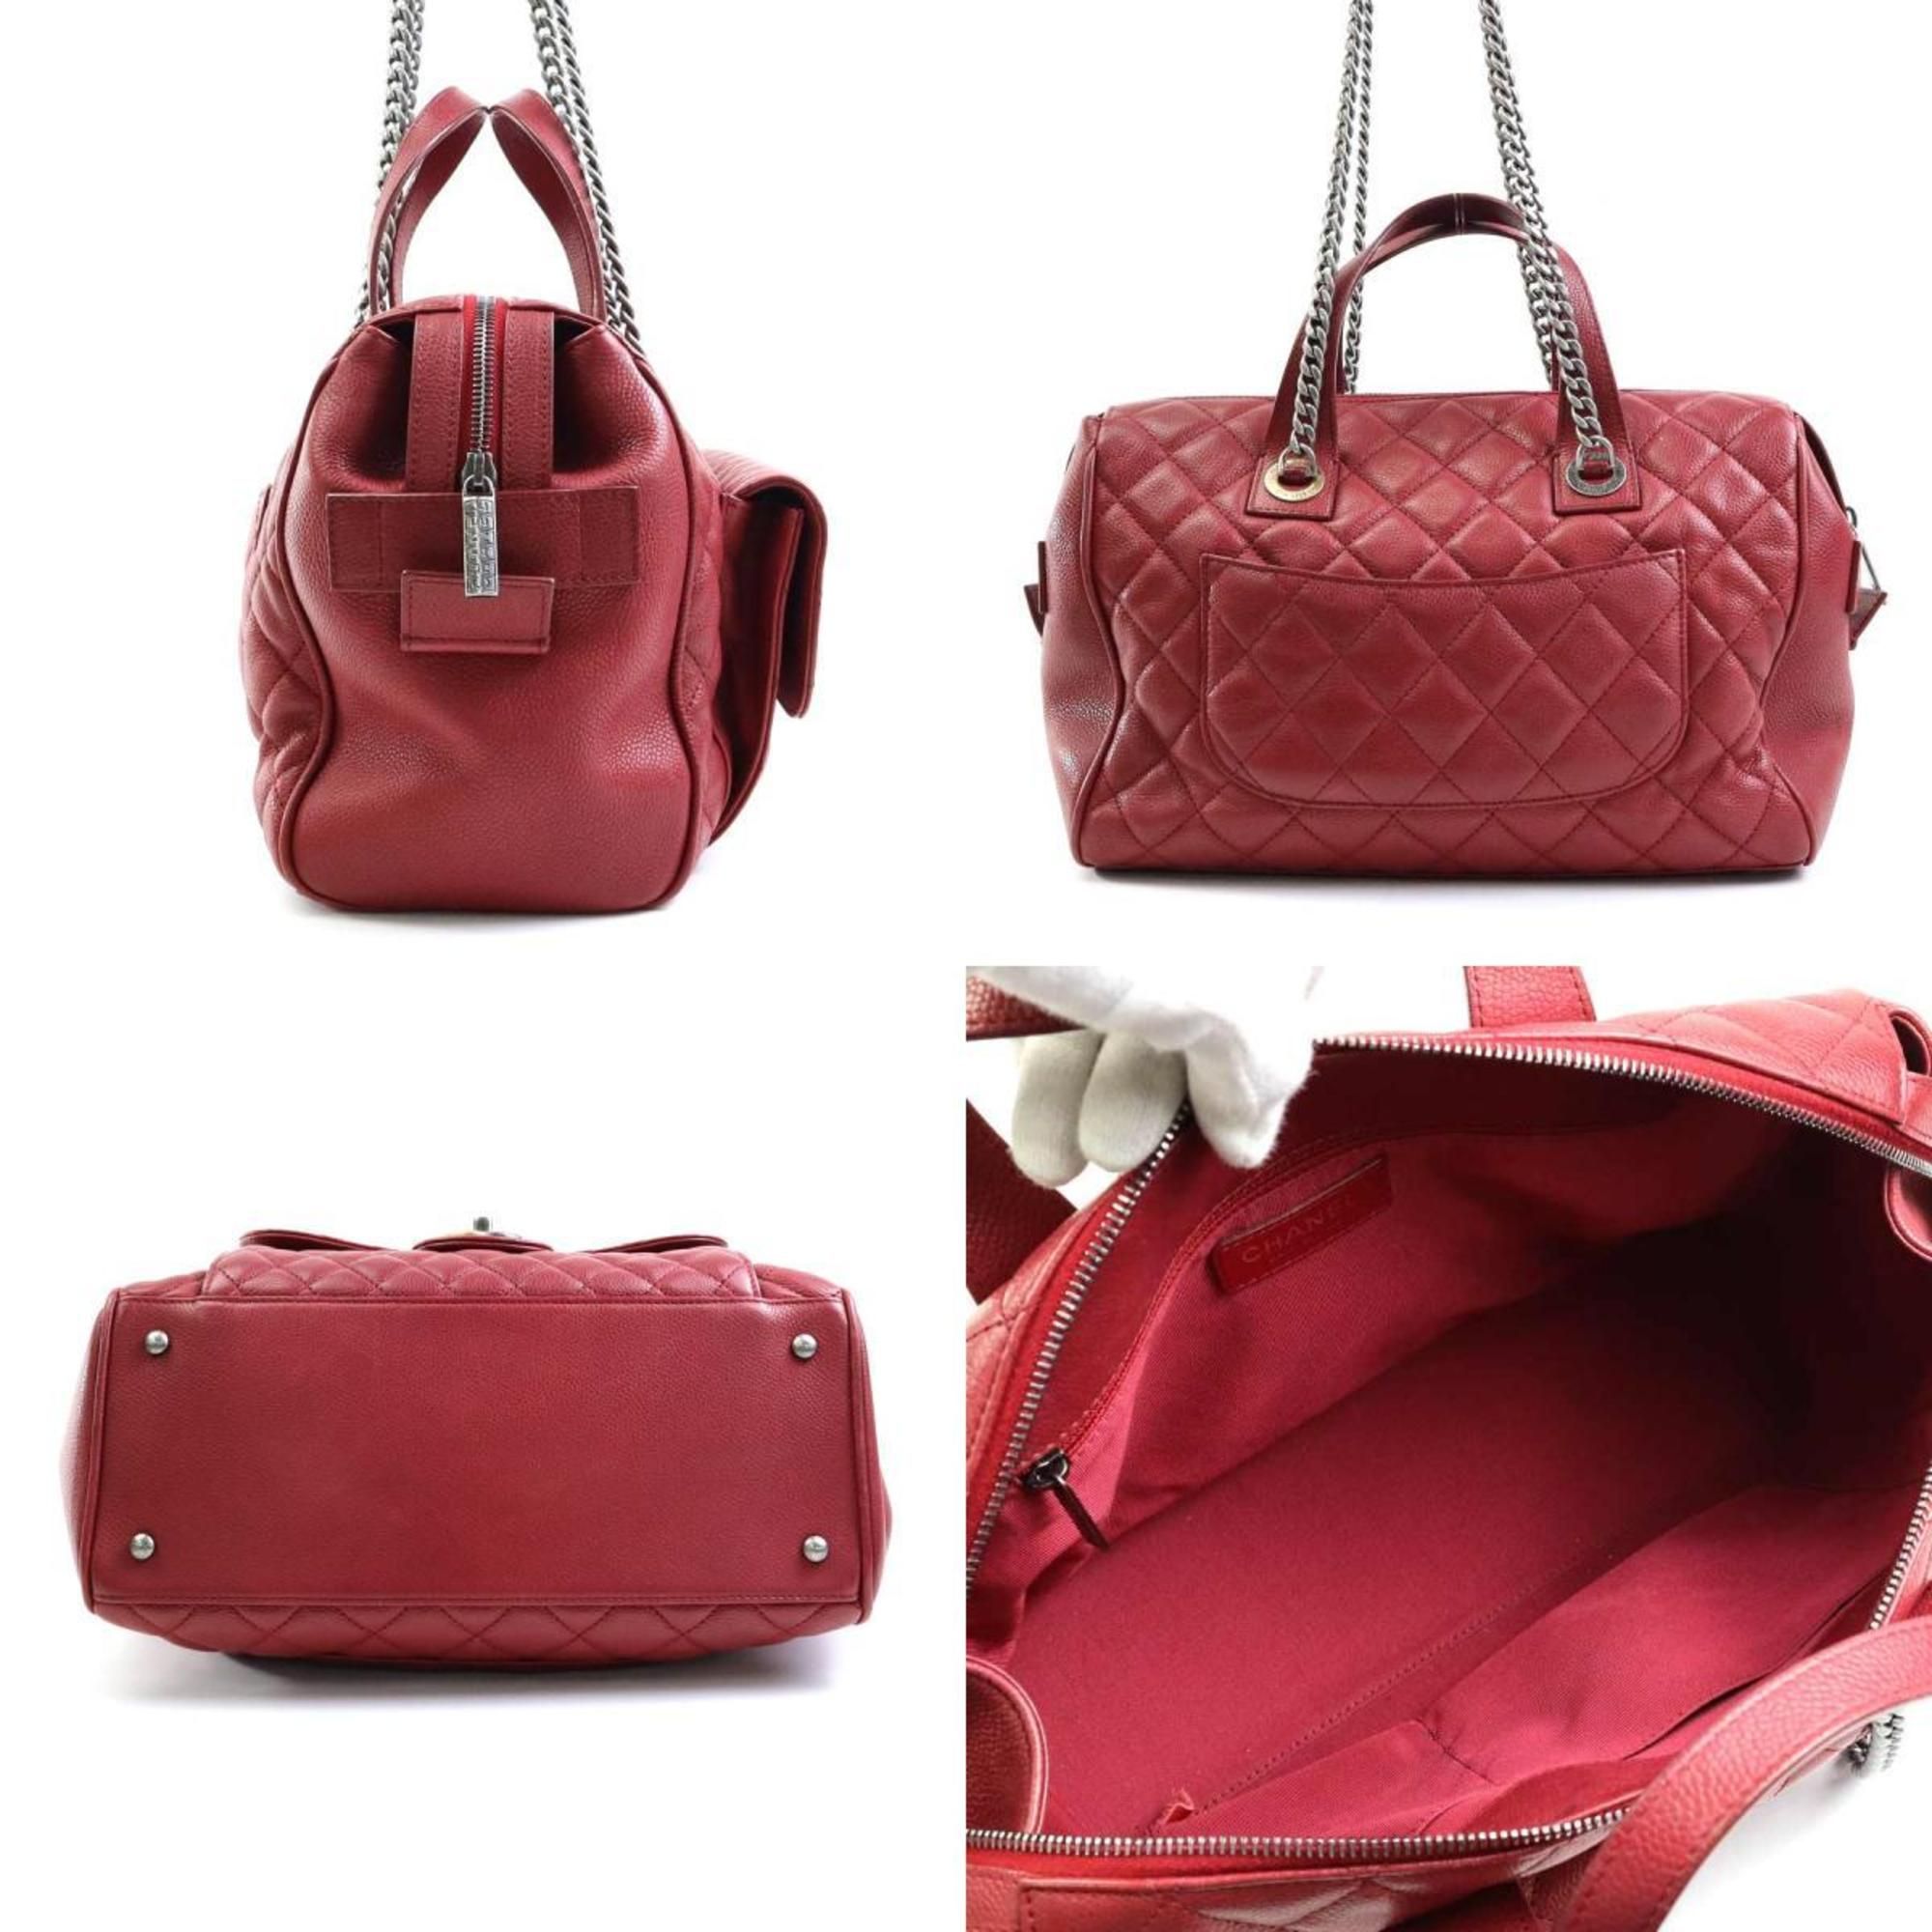 Chanel Chanel Women's Caviar Leather Handbag,Shoulder Bag Burgundy Size ONE SIZE - 2 Preview